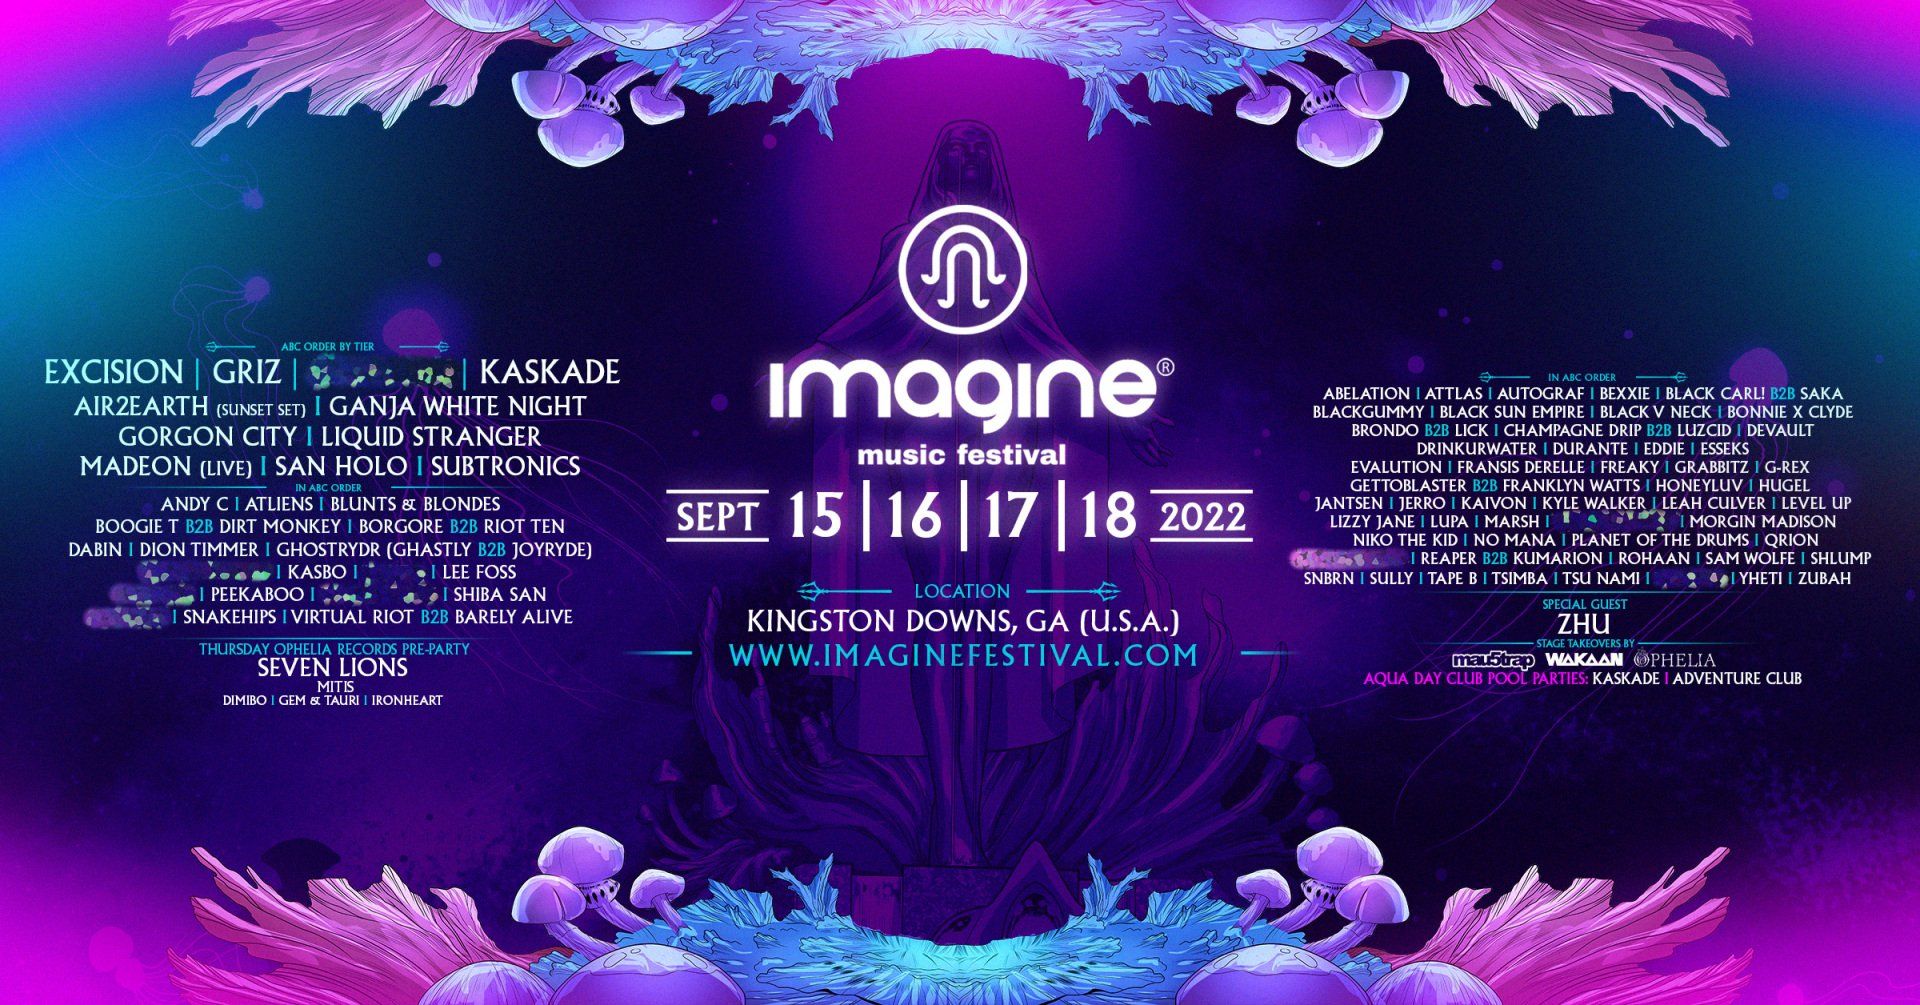 Imagine Music Festival